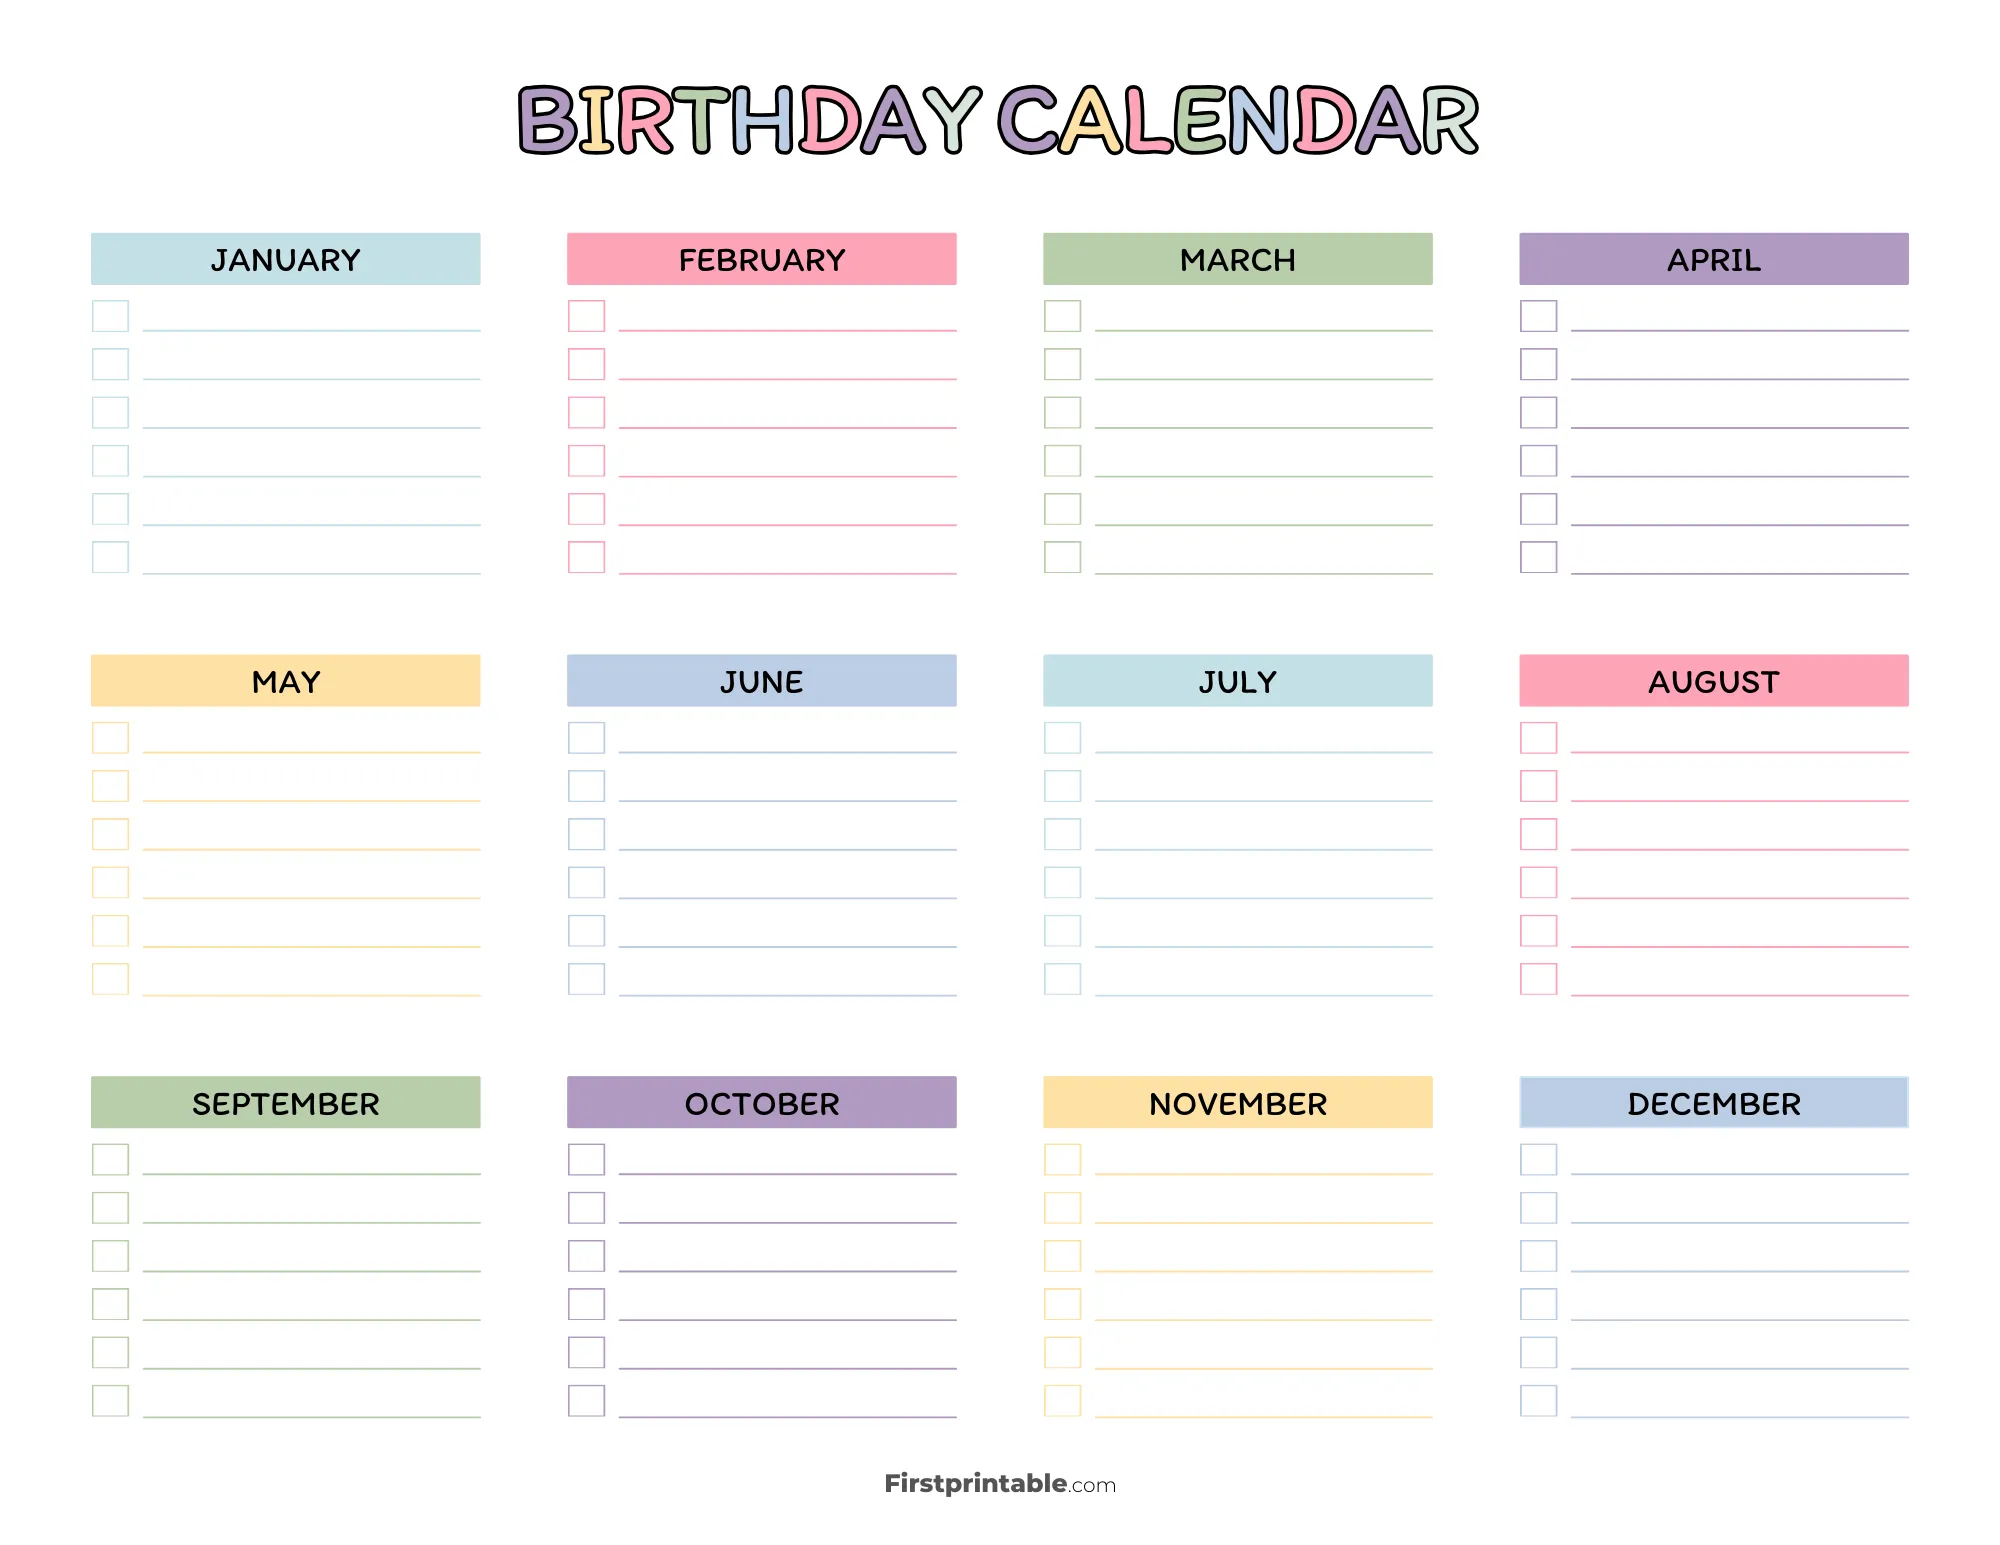 Birthday Calendar Printable Template 24